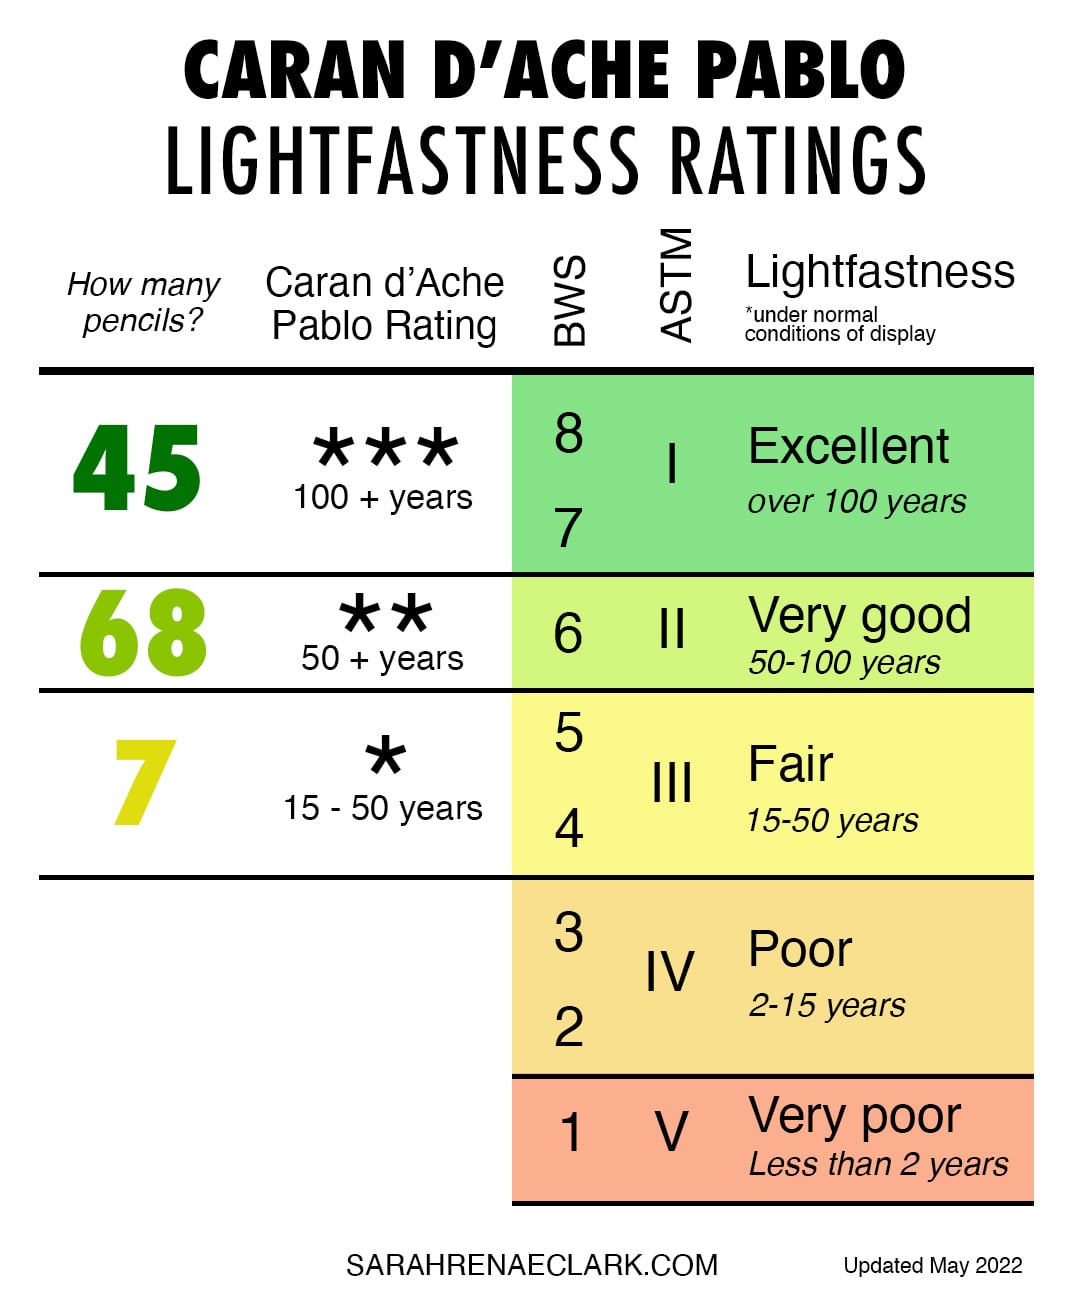 Caran d'Ache Pablo lightfastness ratings copy